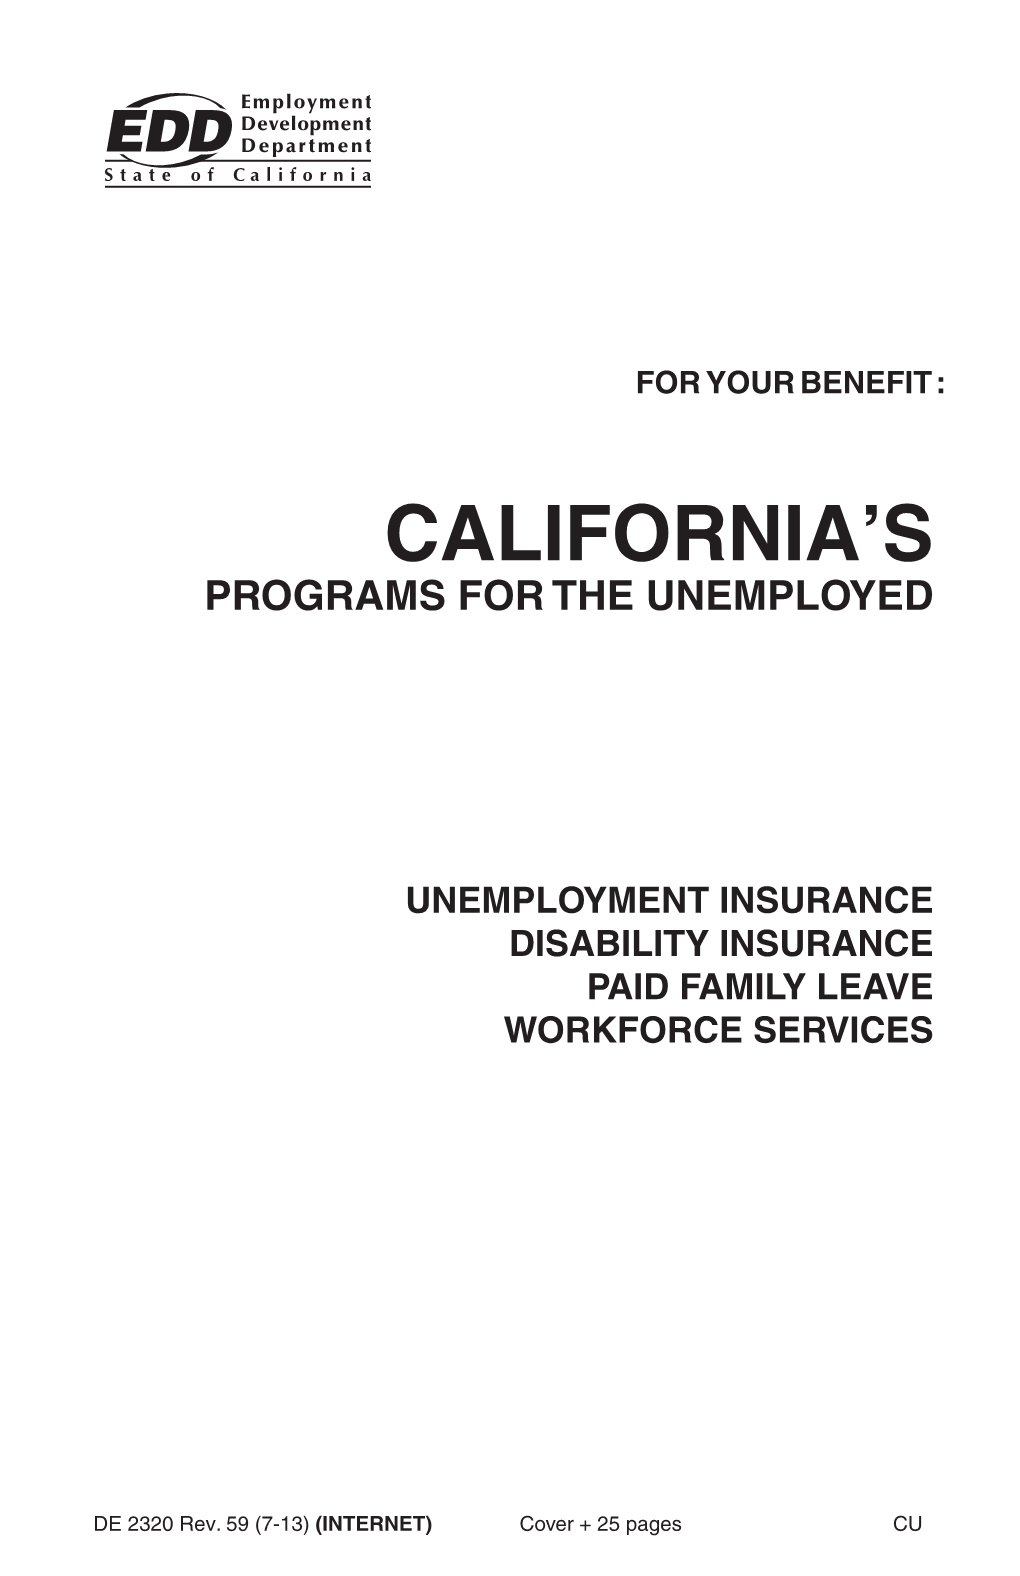 California's Programs for the Unemployed (DE 2320)